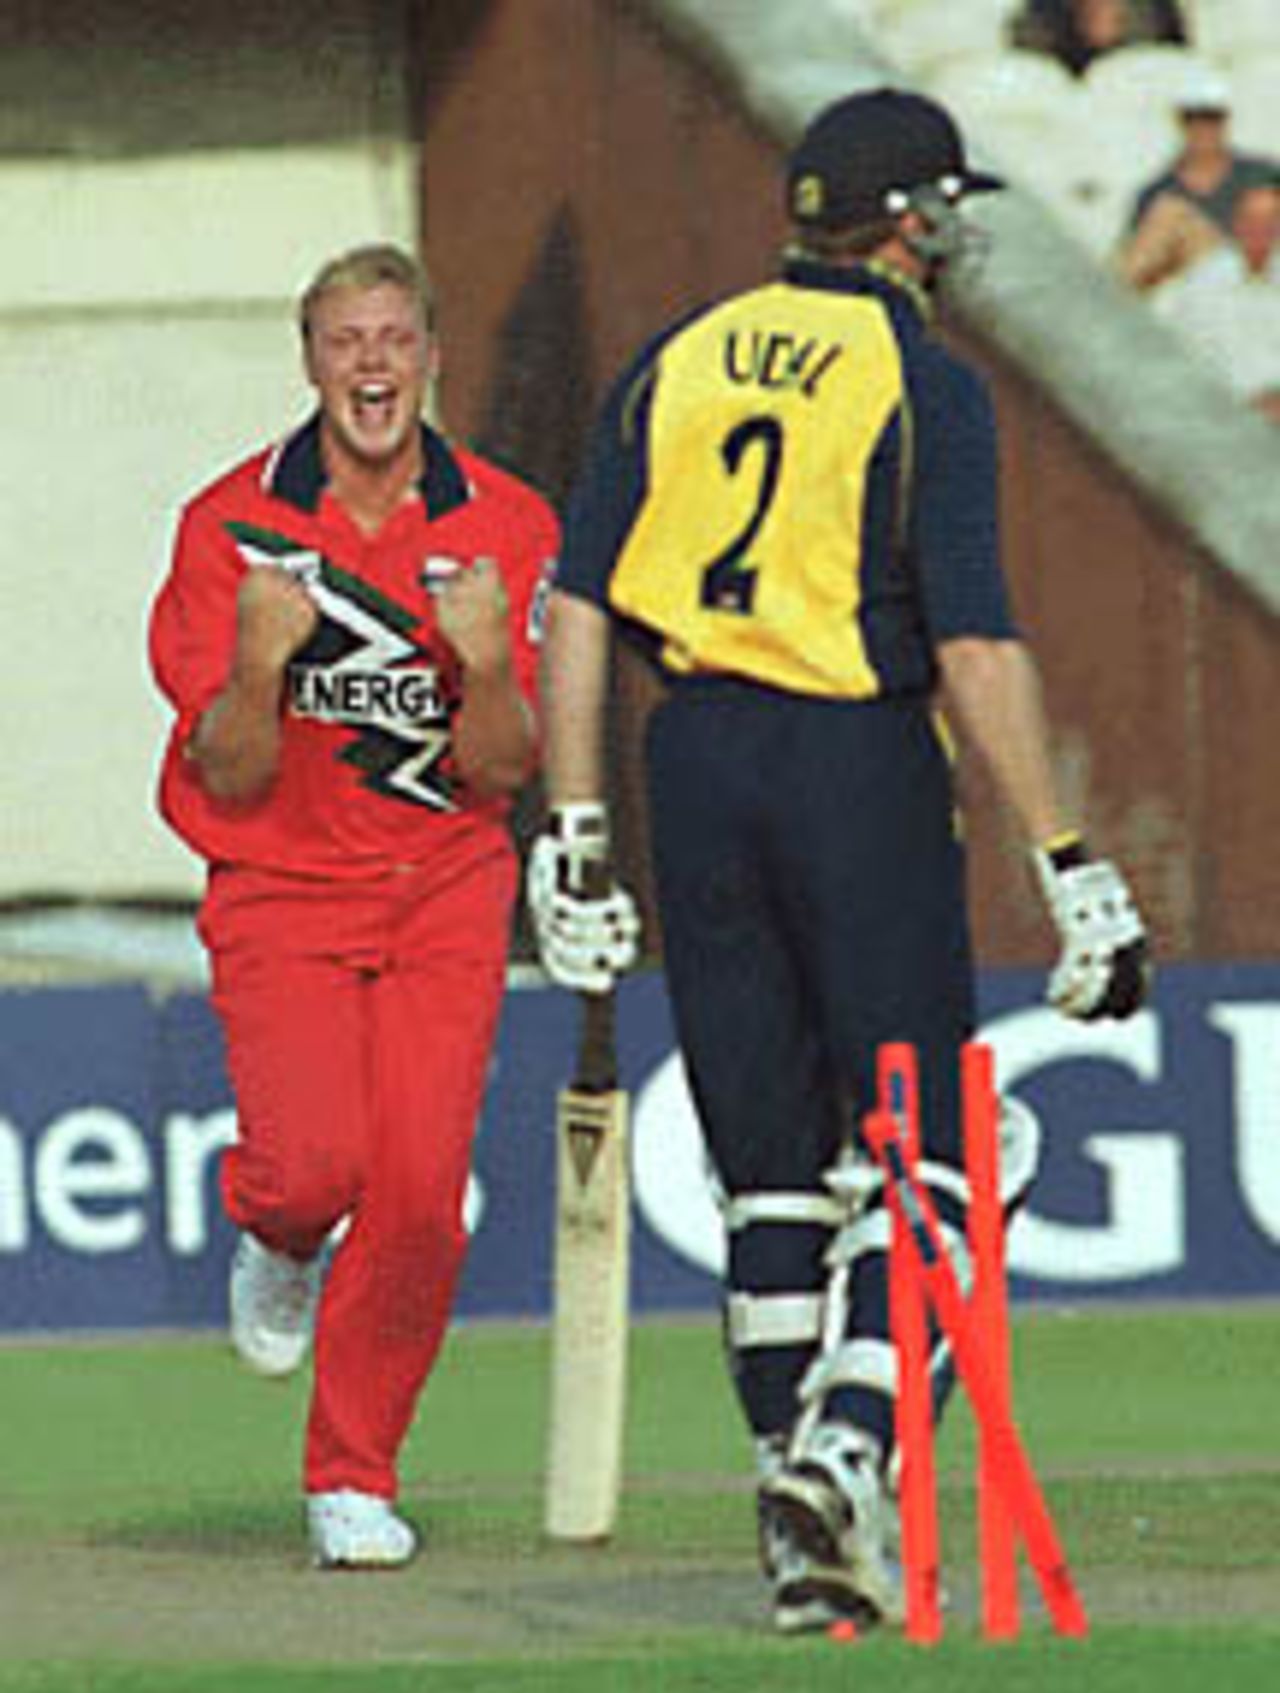 Andrew Flintoff celebrating the wicket of Udal, Hampshire v Lancashire, National League 1st Division, 6 September 1999